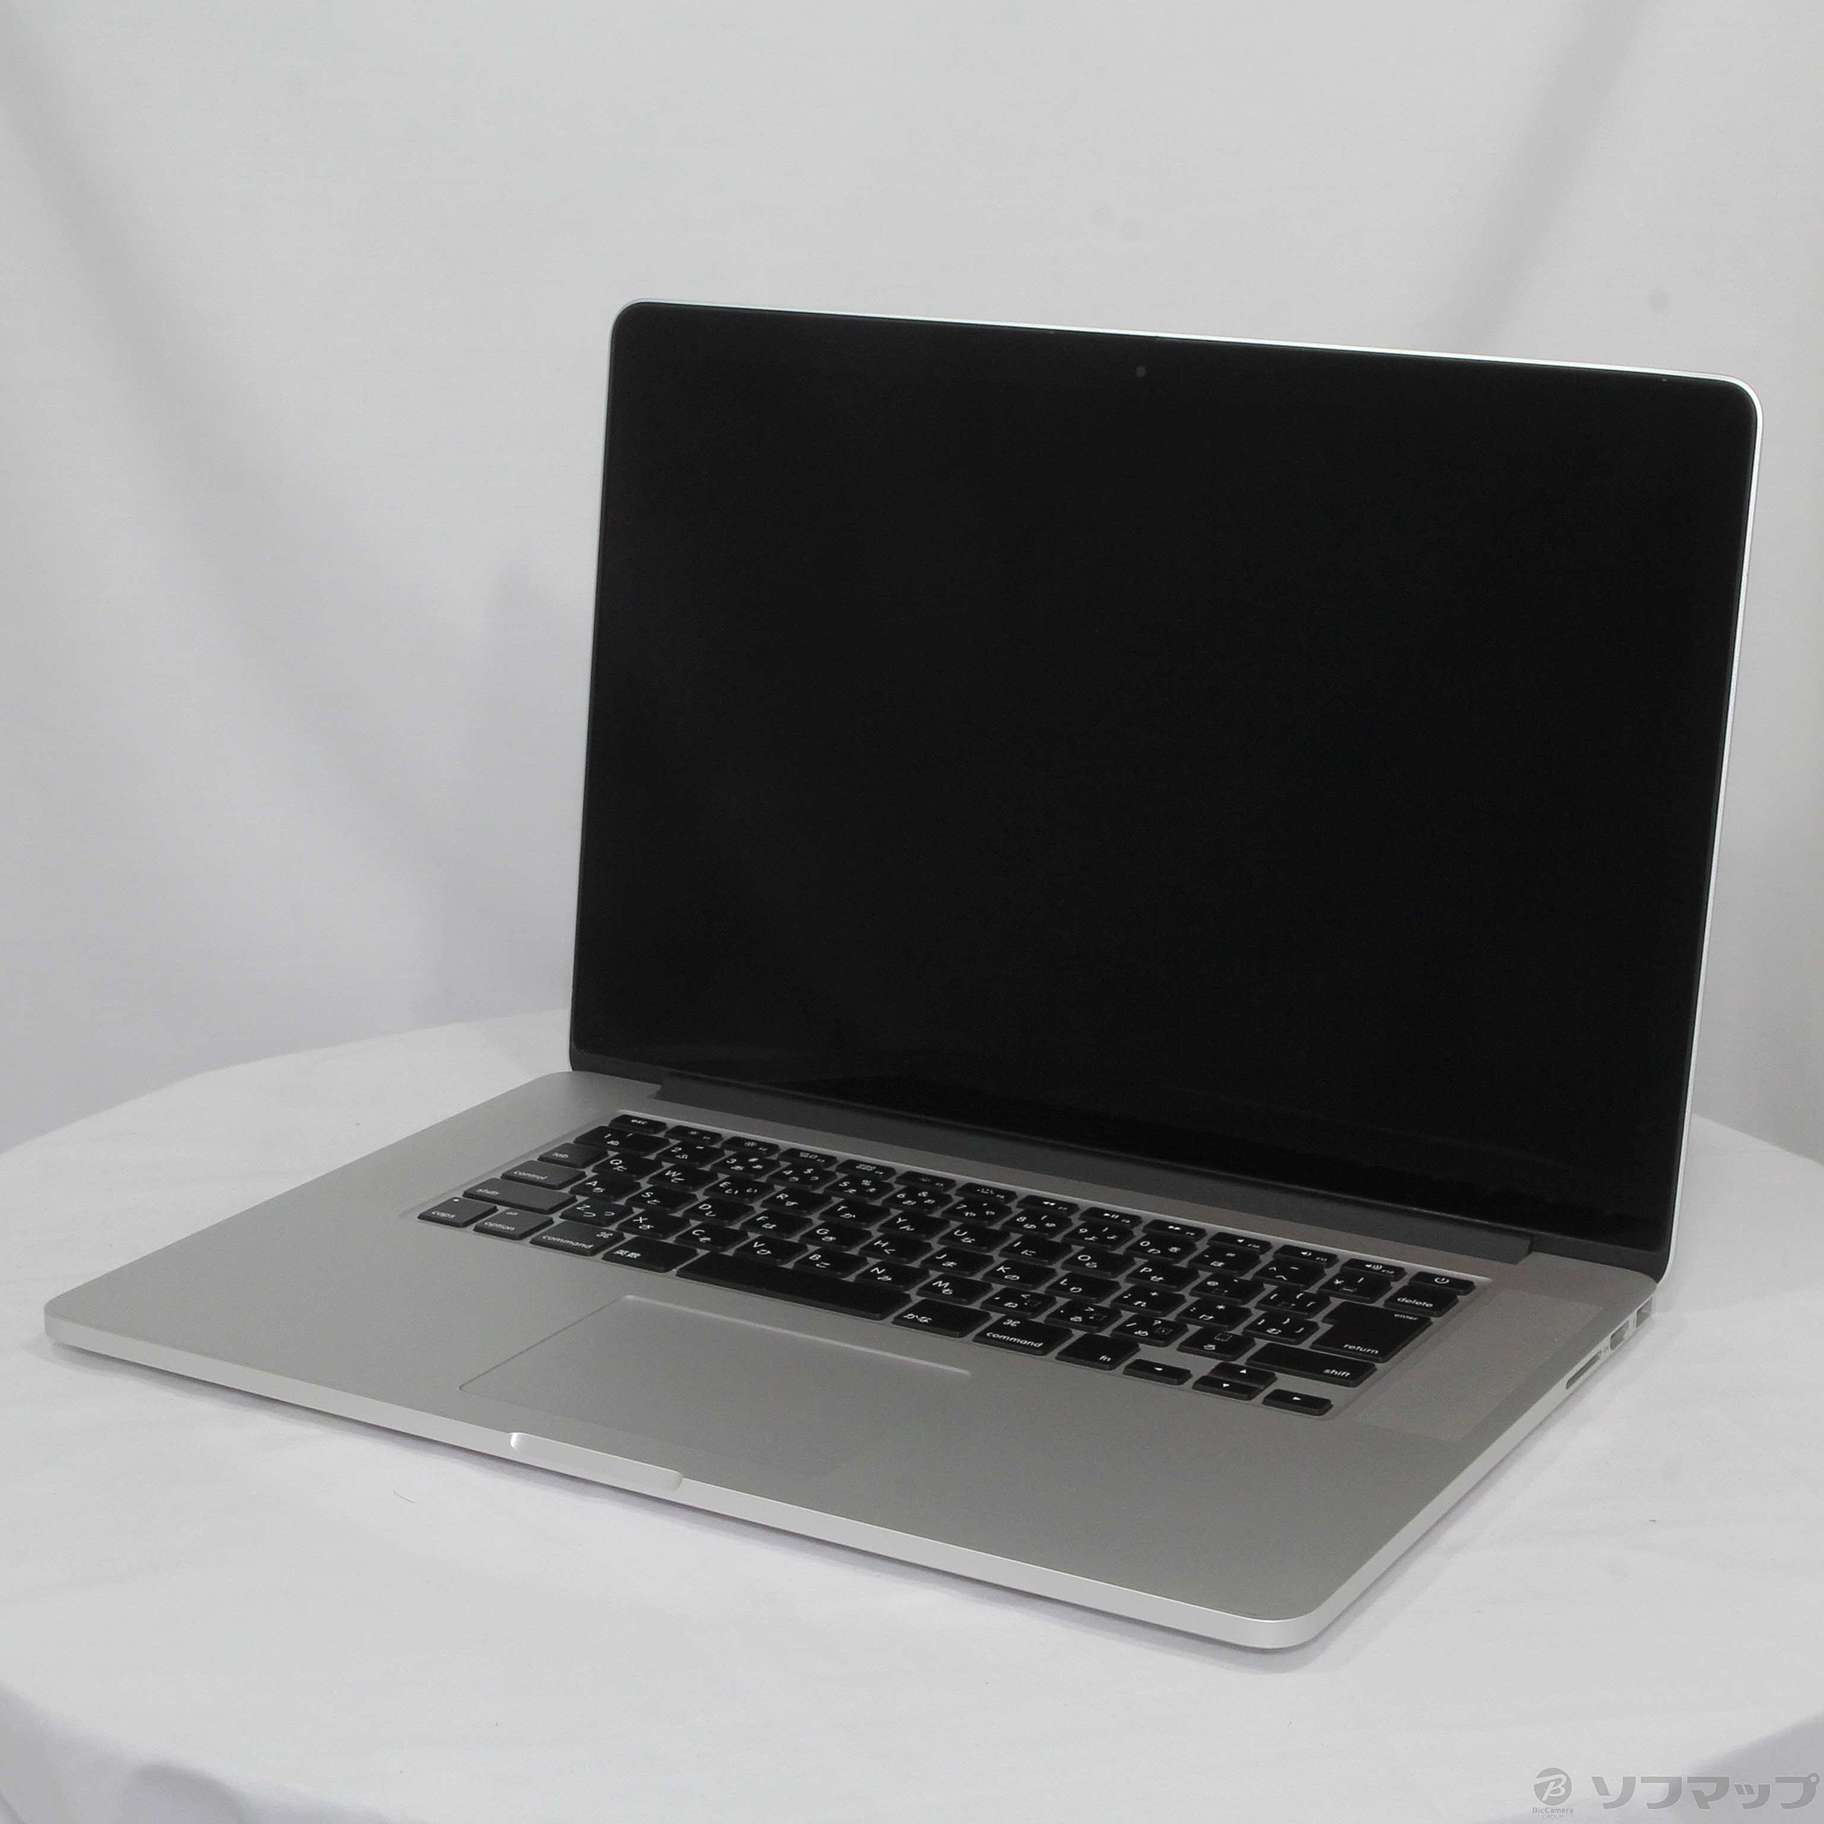 中古品〕 MacBook Pro 15-inch Mid 2015 MJLT2J／A Core_i7 2.5GHz